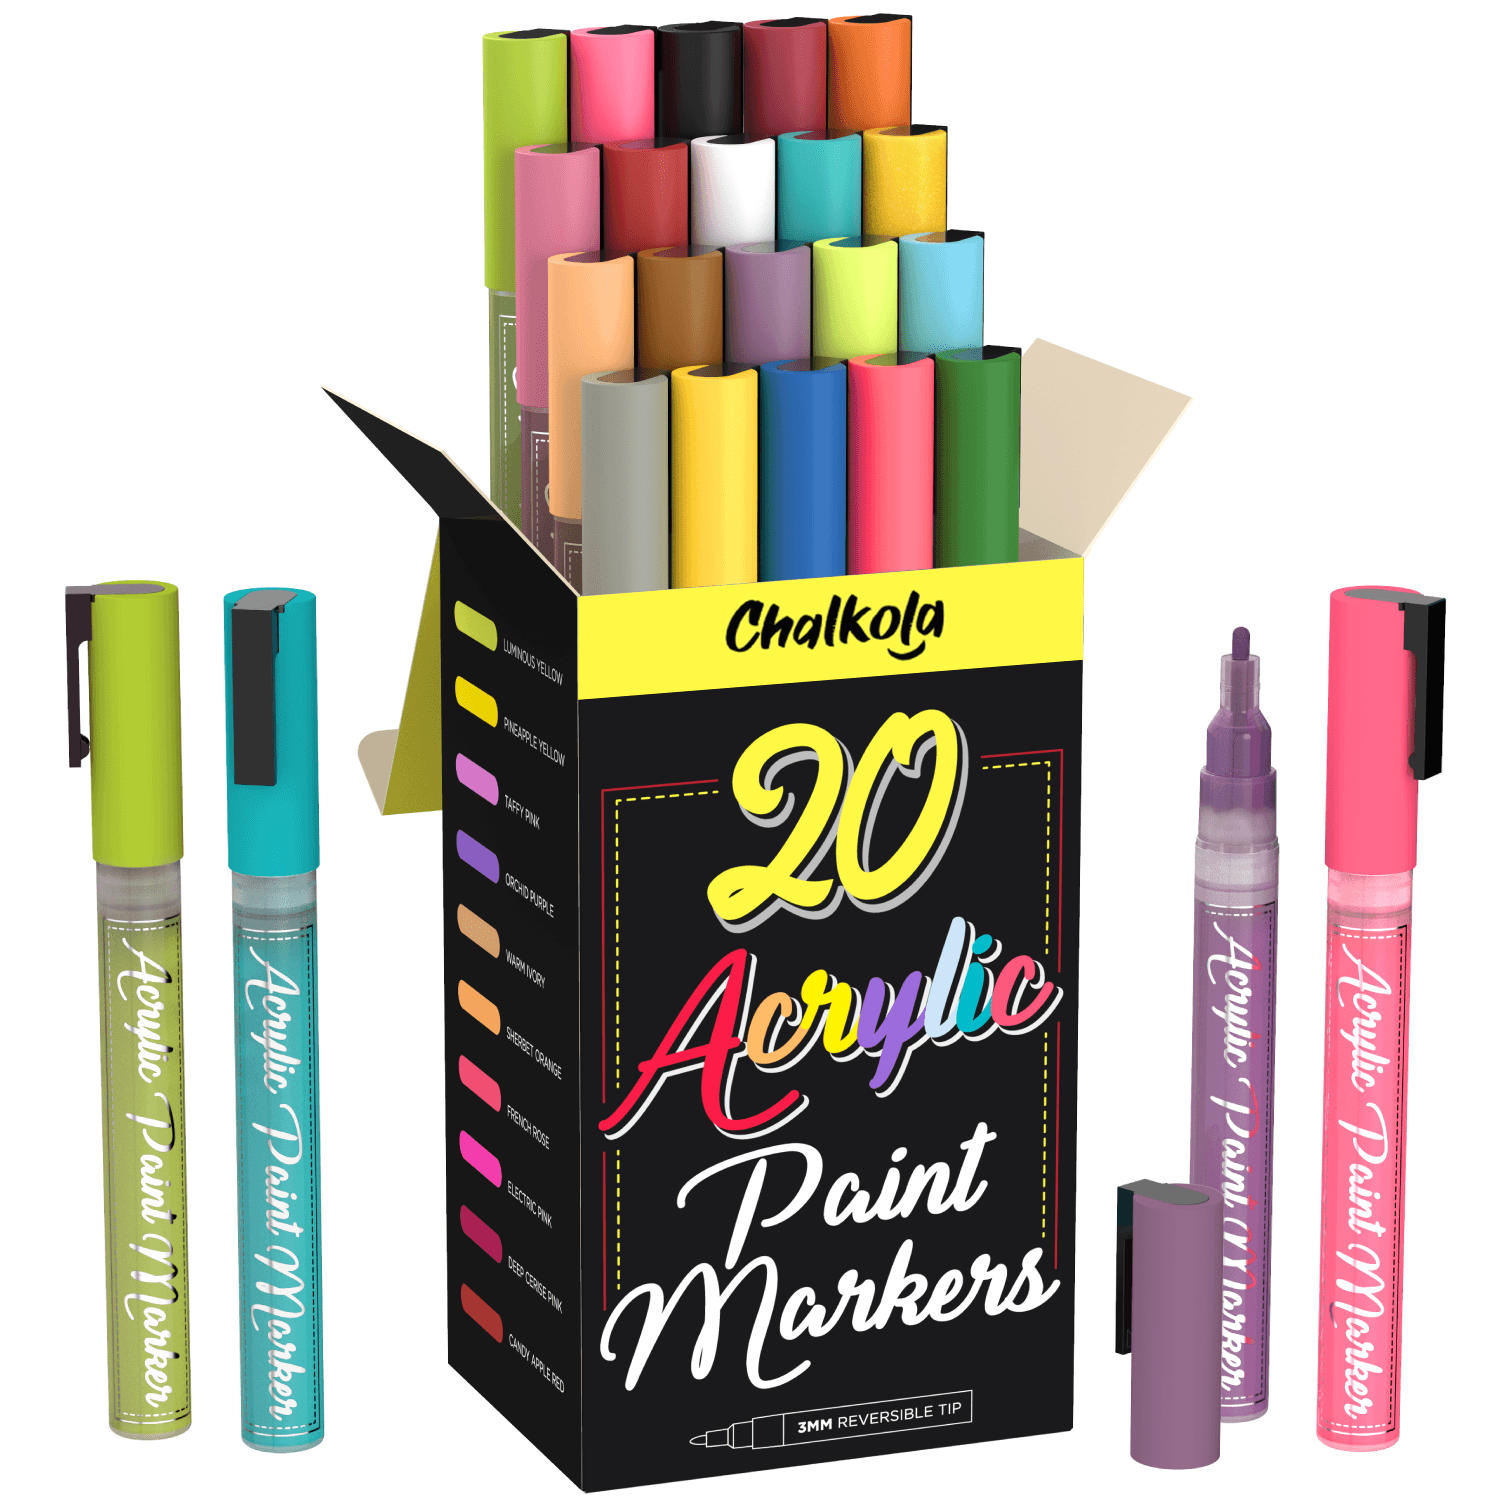 Acrylic Paint Marker Pens - Pack of 20 - Chalkola Art Supply